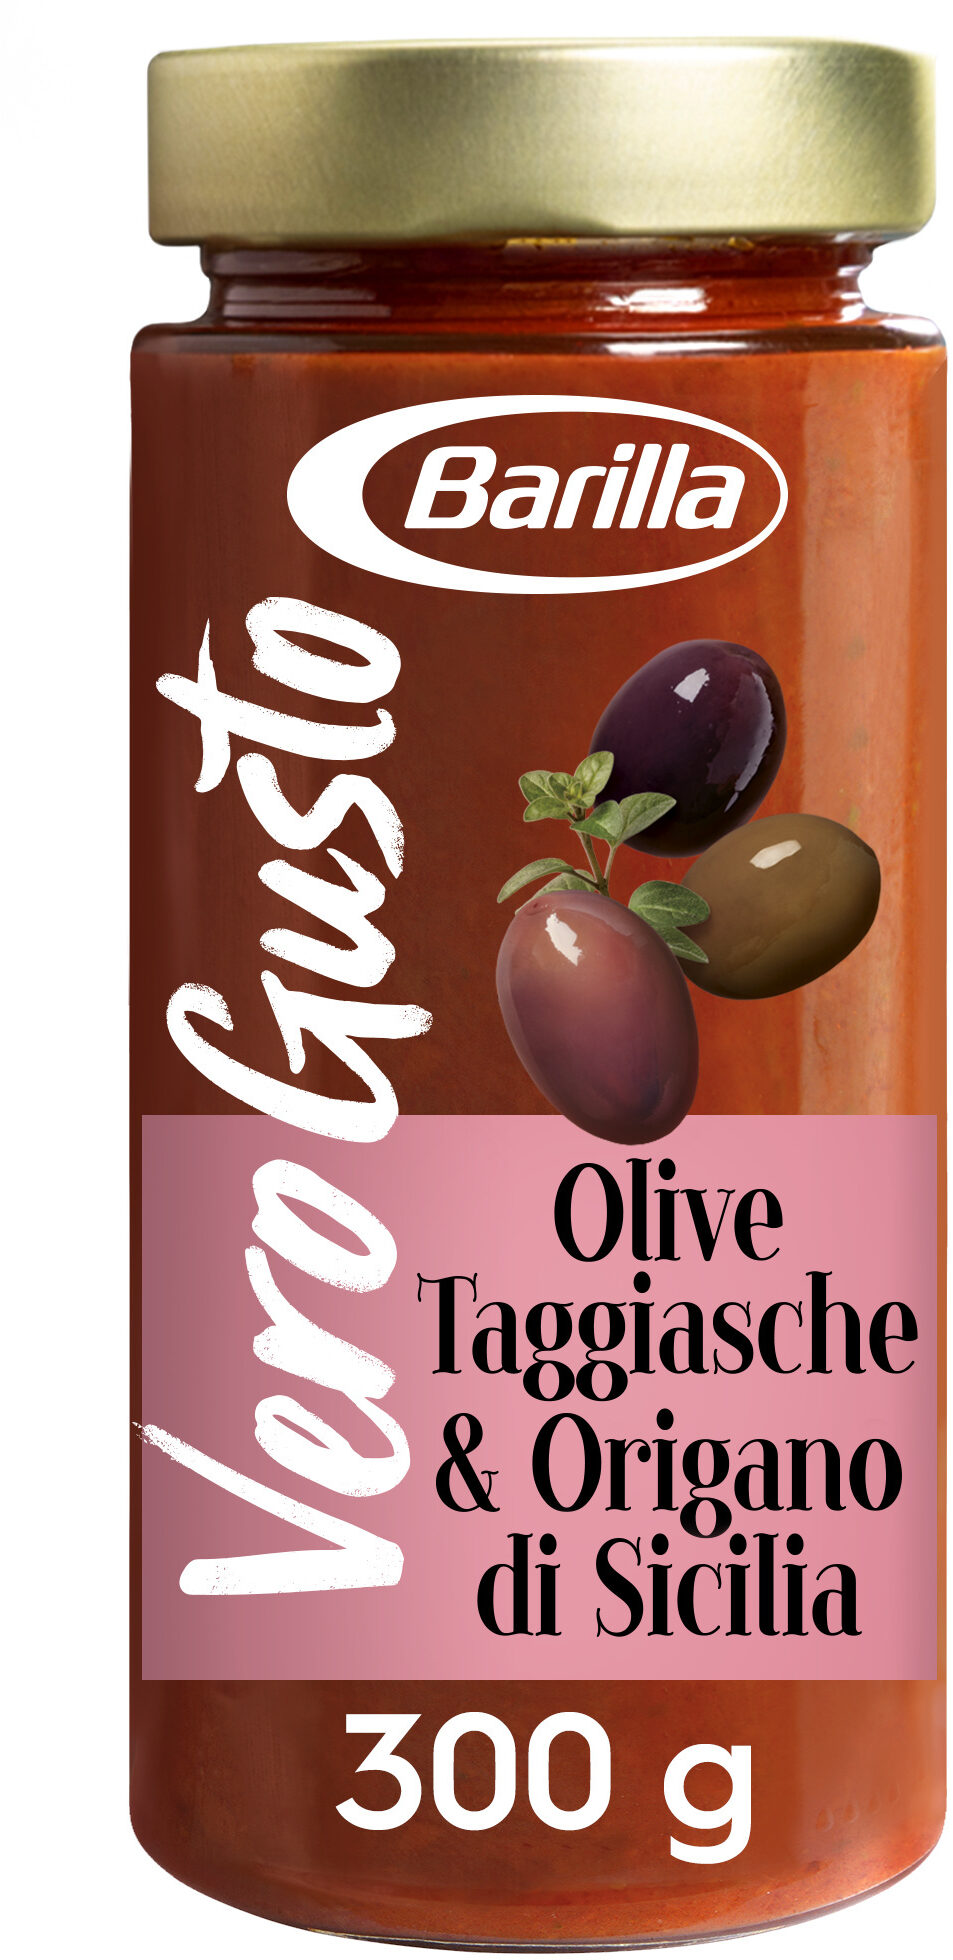 Barilla vero gusto sauce tomates aux olives et origan 300g - Product - fr